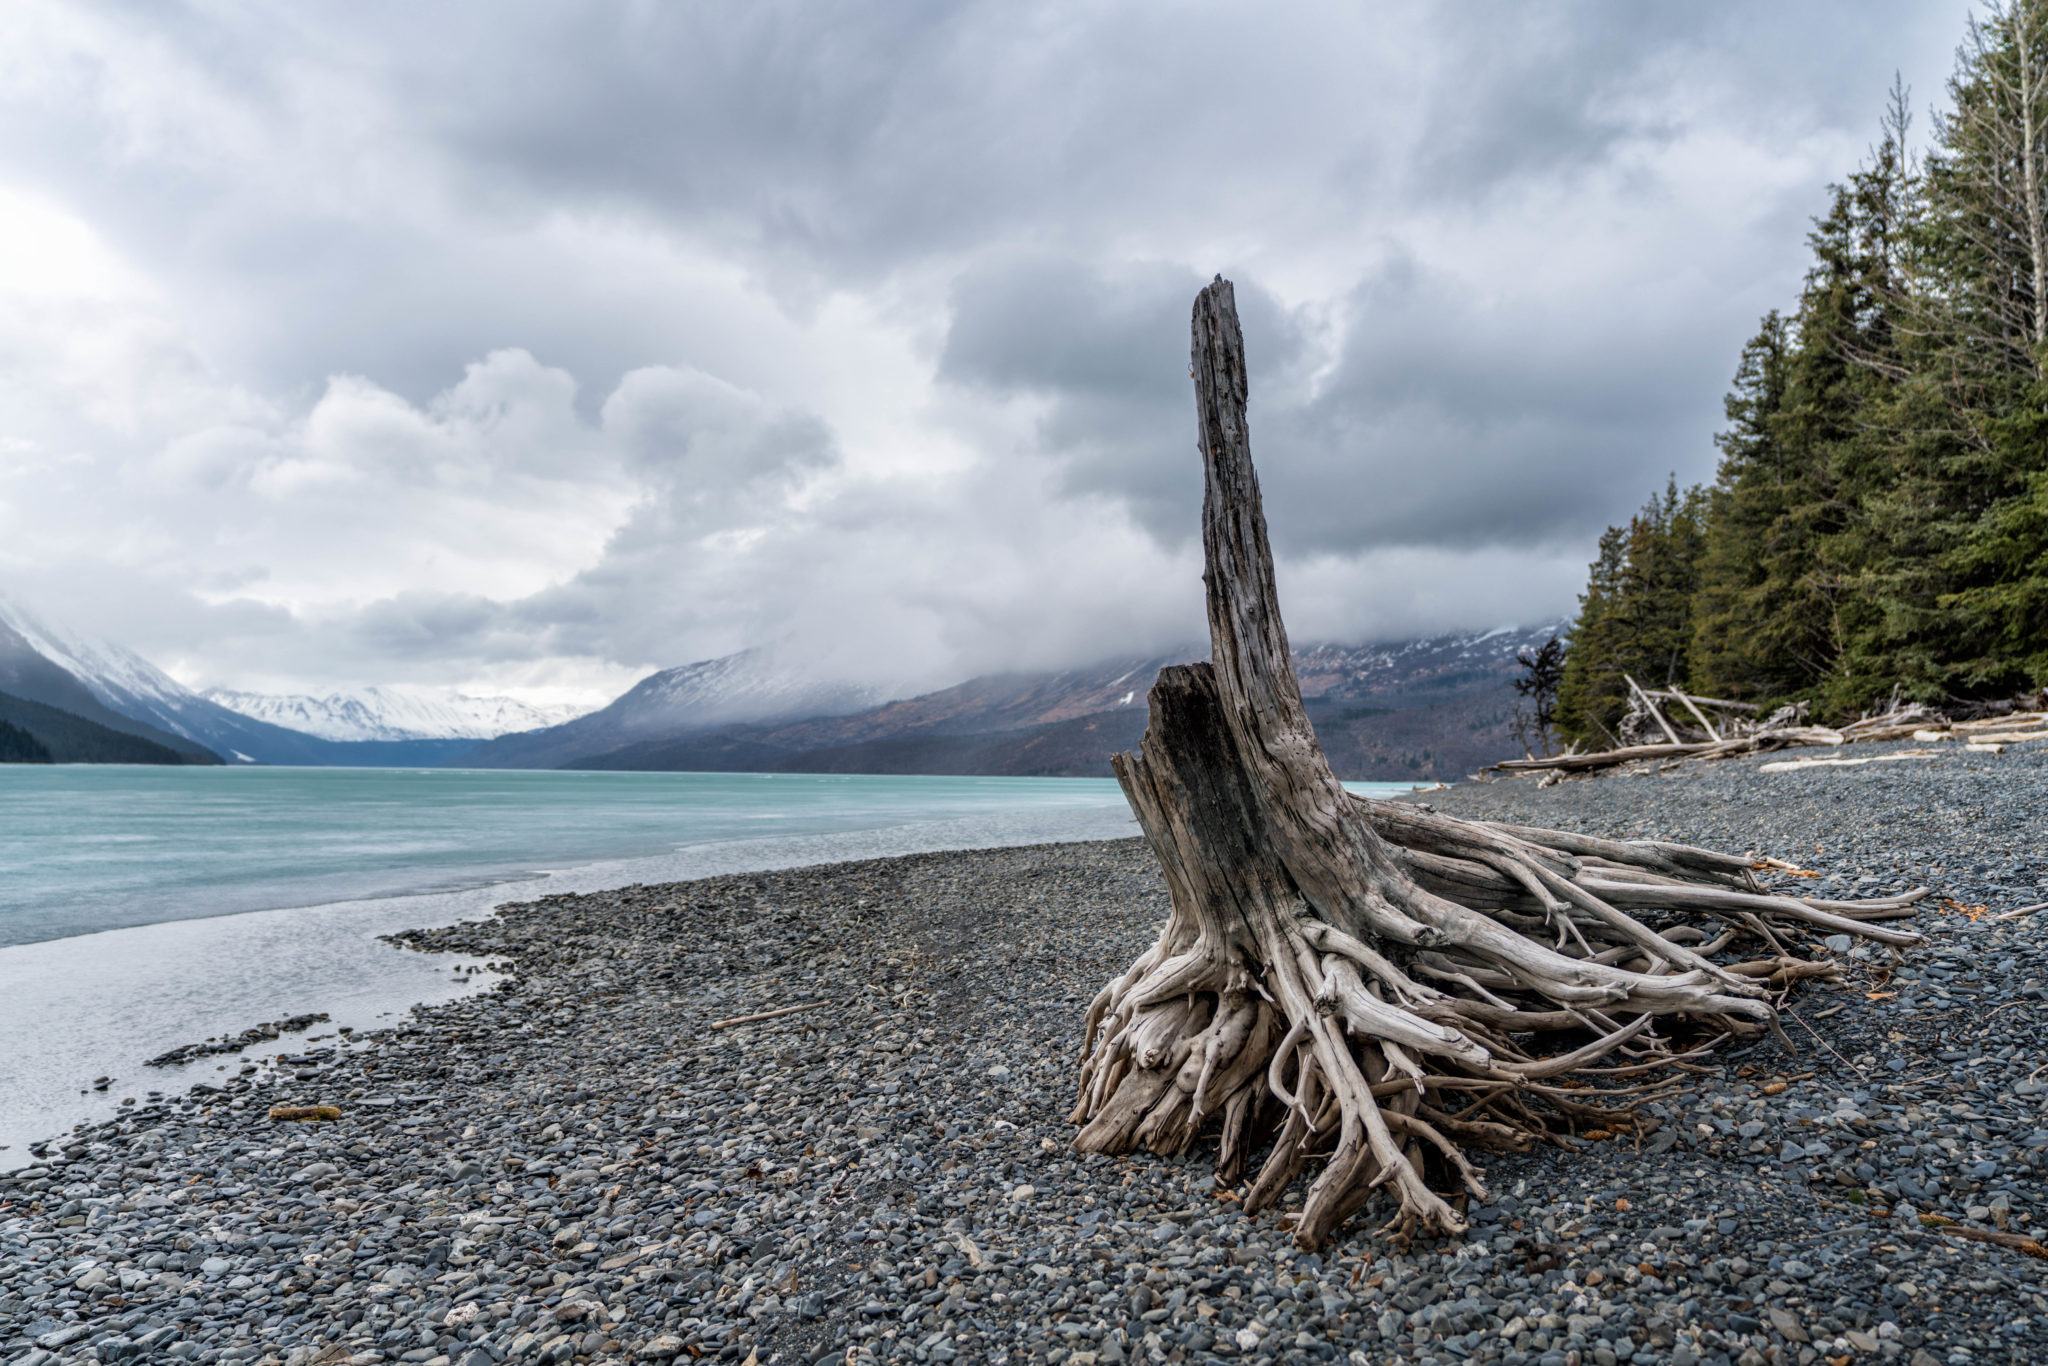 a tree stump on a rocky beach